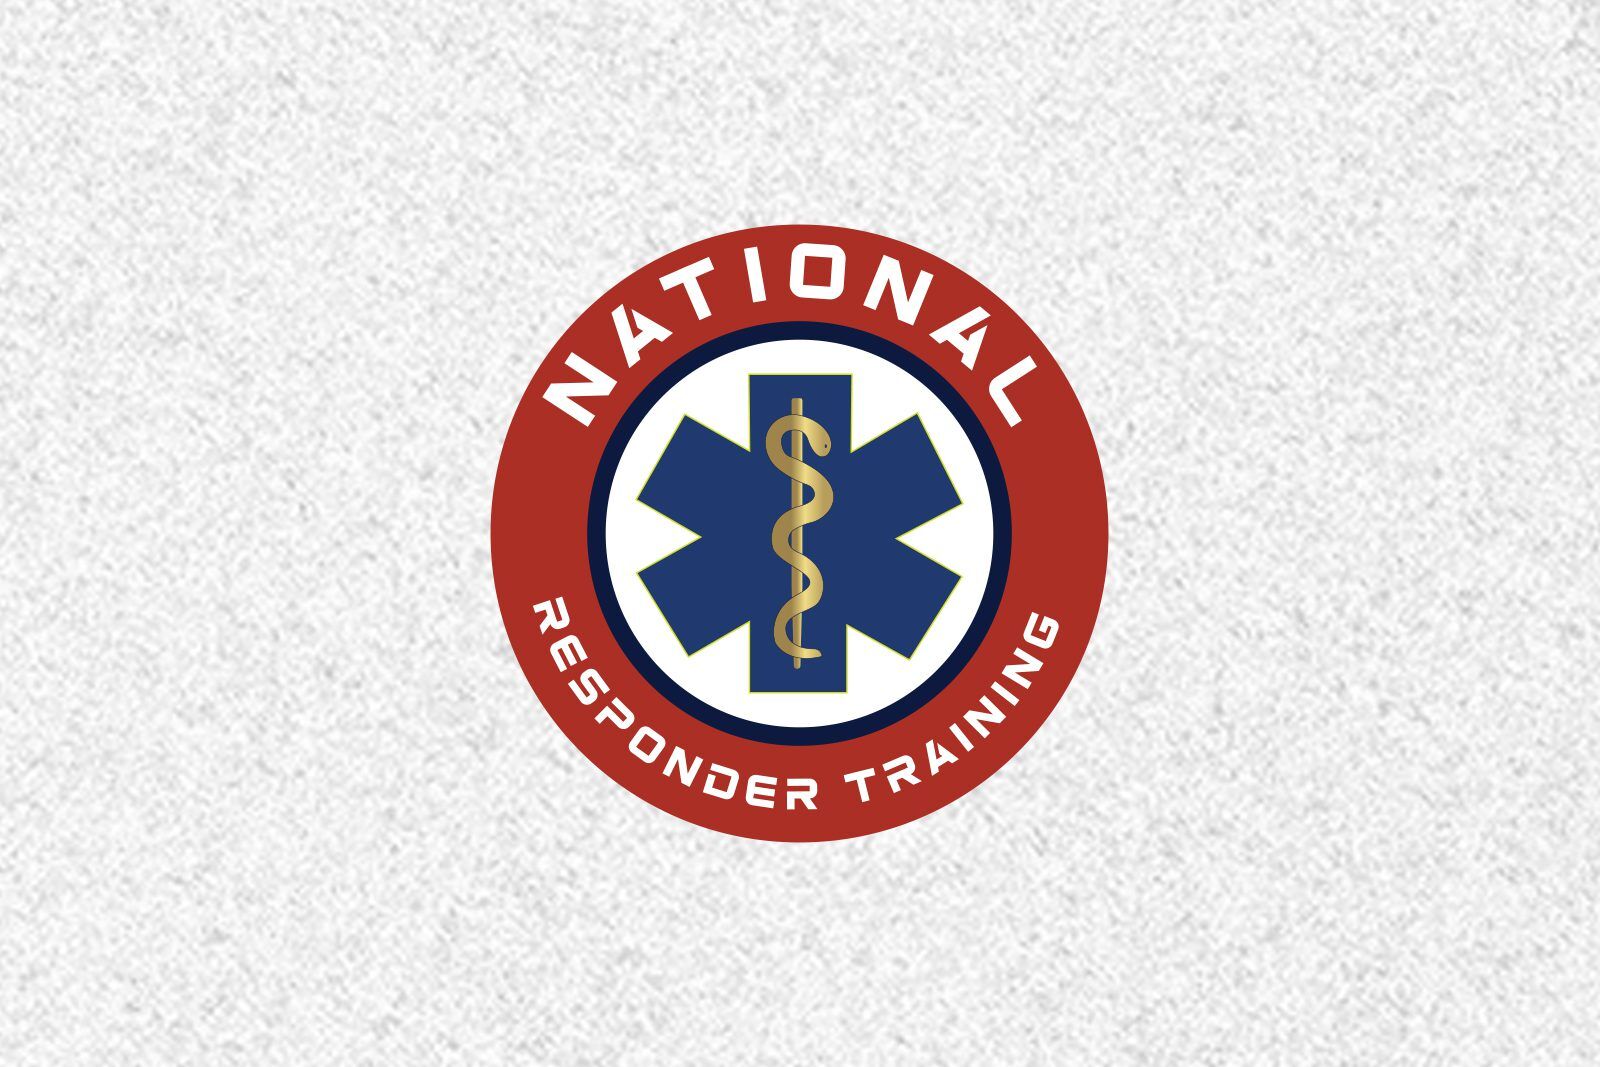 National Responder Training